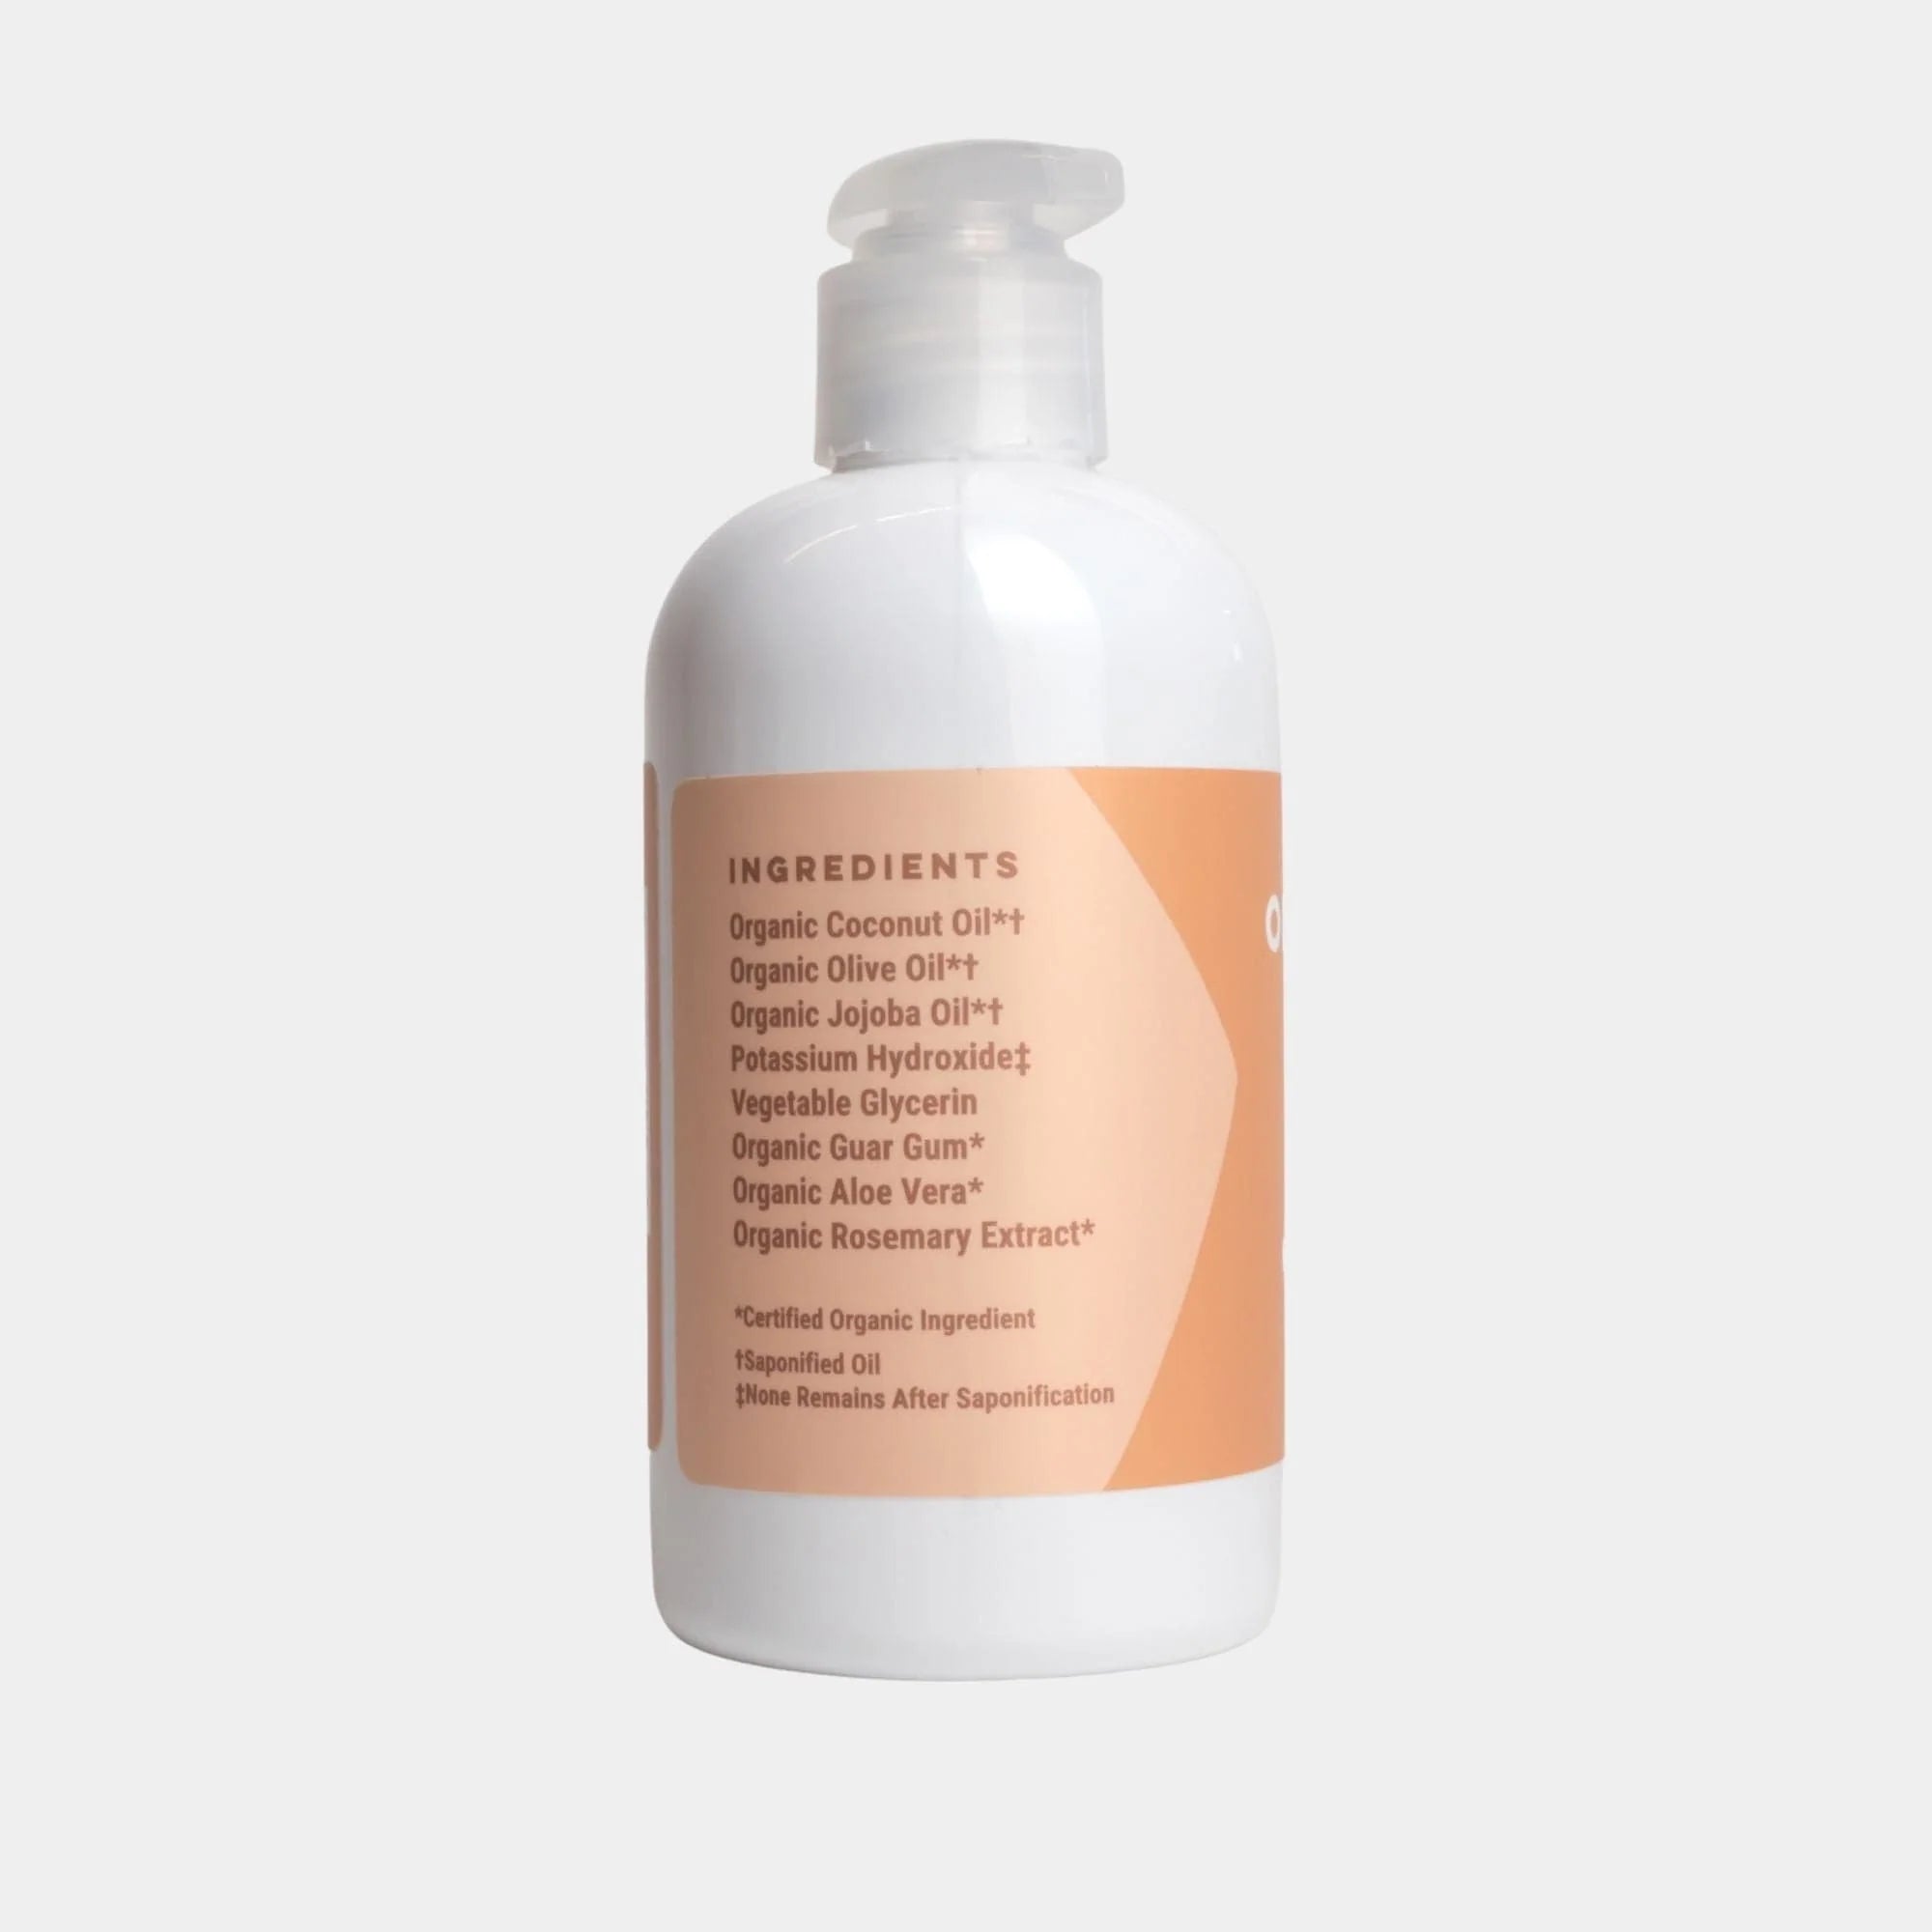 Organic Bath Co. | Naked Hand Soap